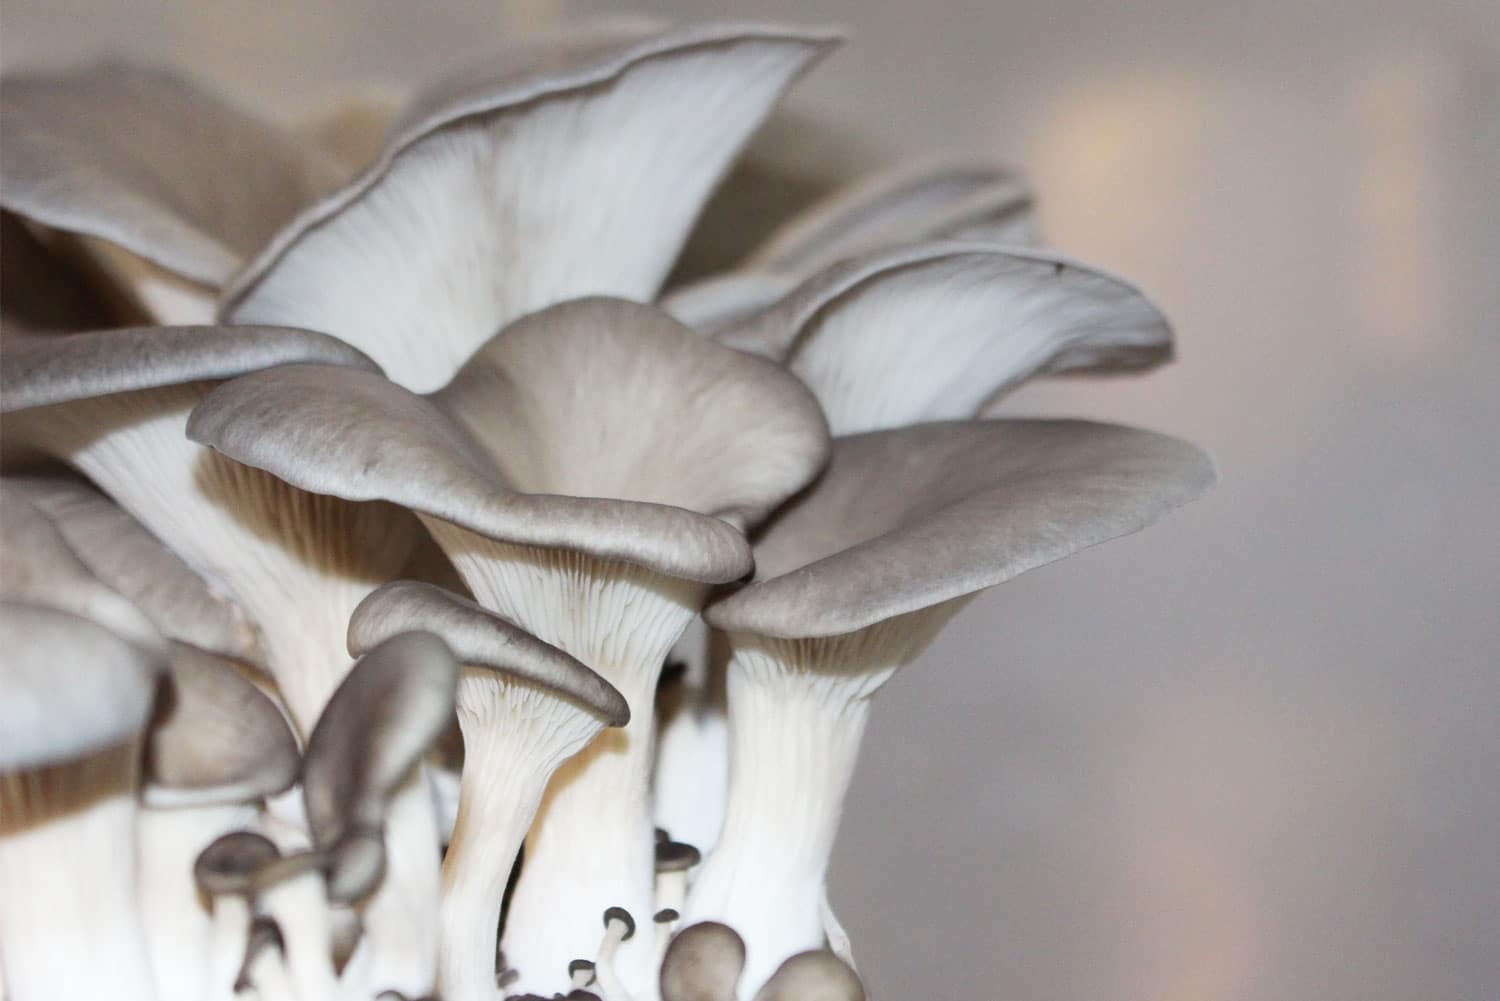 Medicinal mushroom brand Hifas da Terra: “There's no replacement